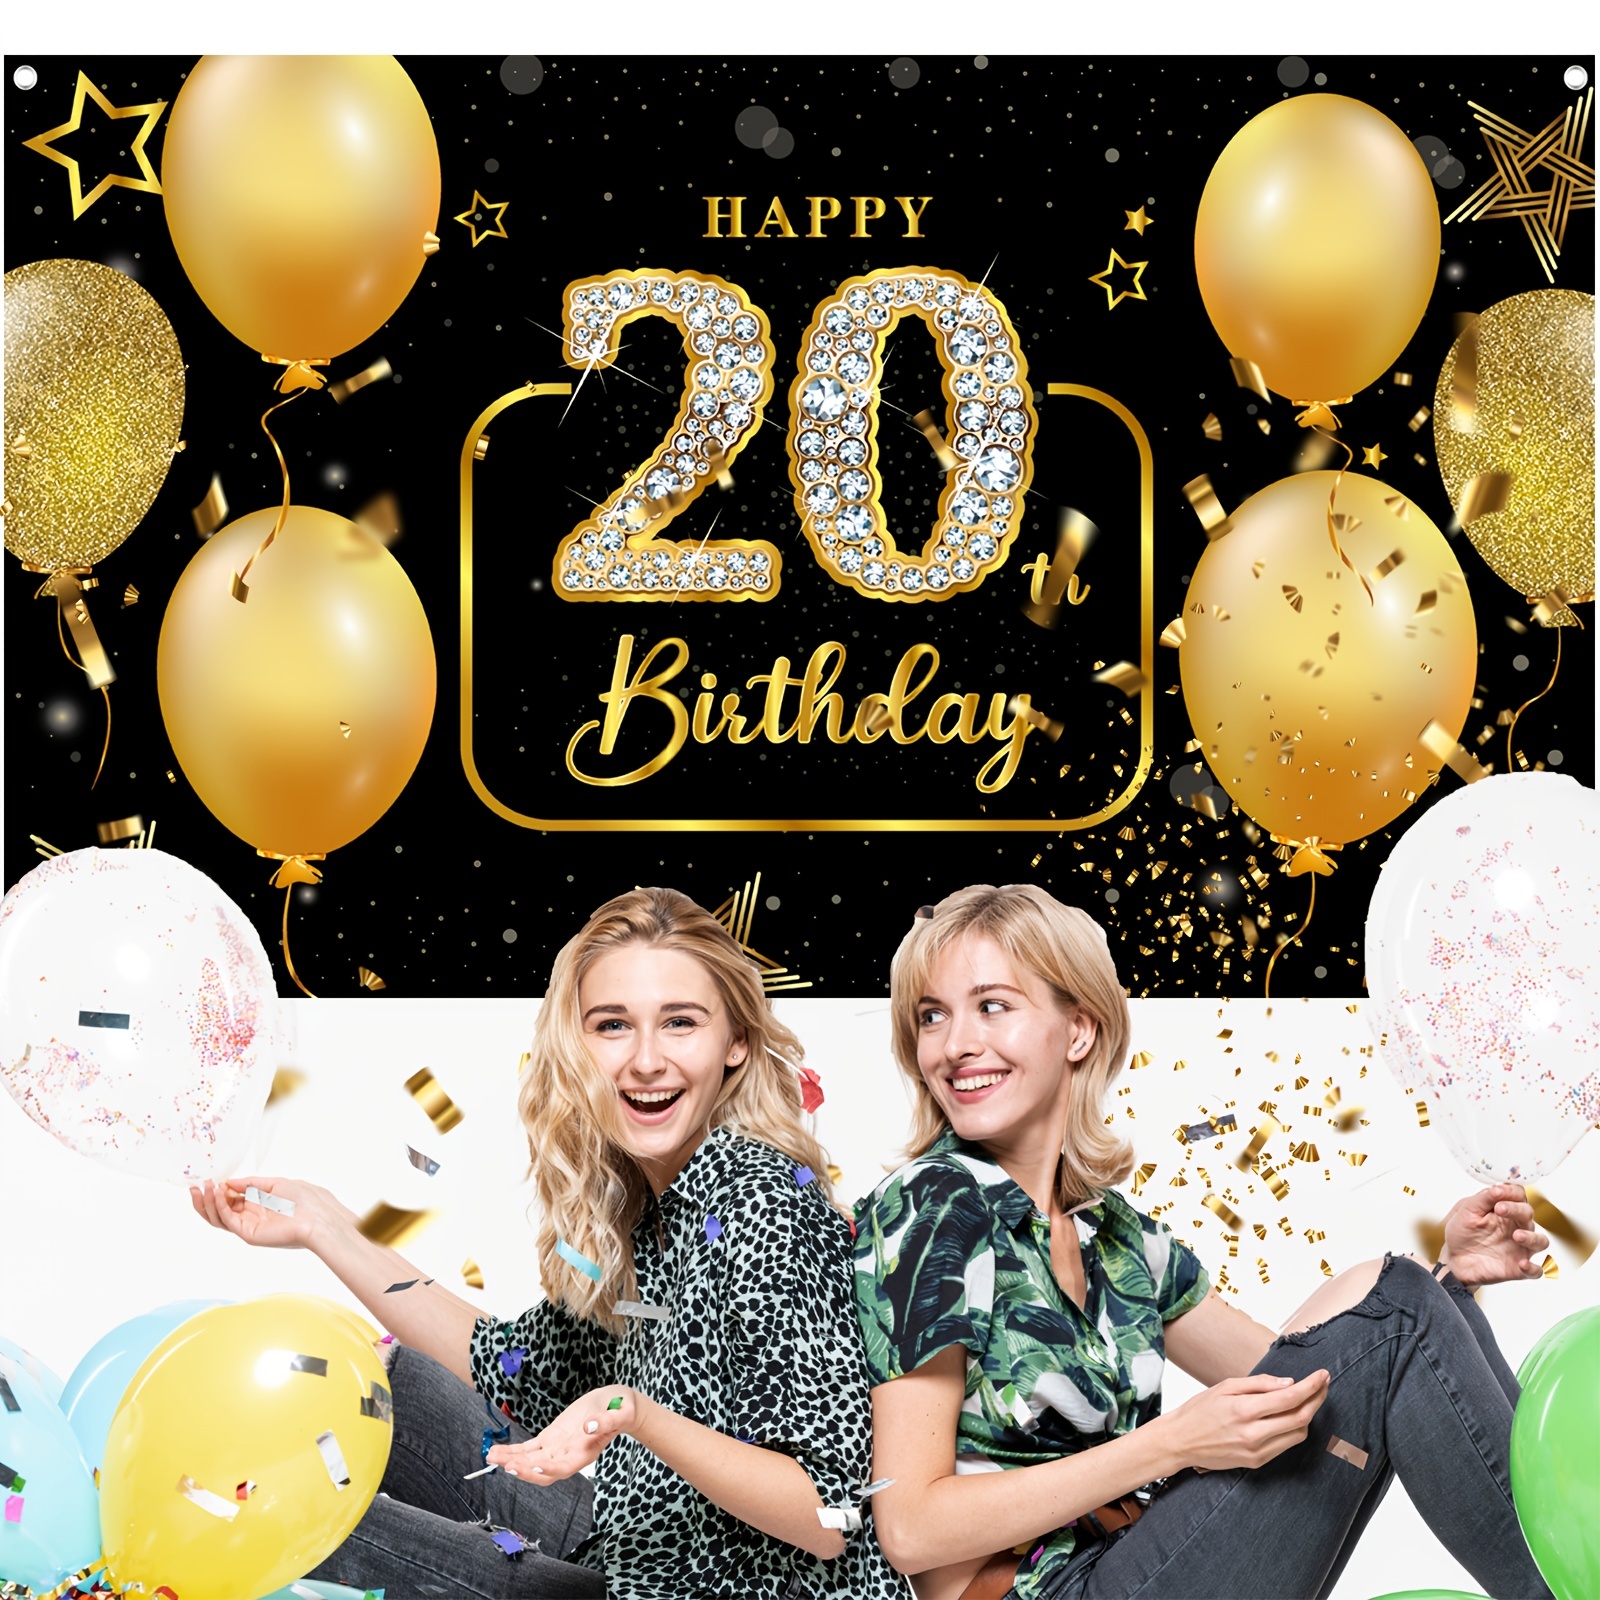 happy 20th birthday balloons